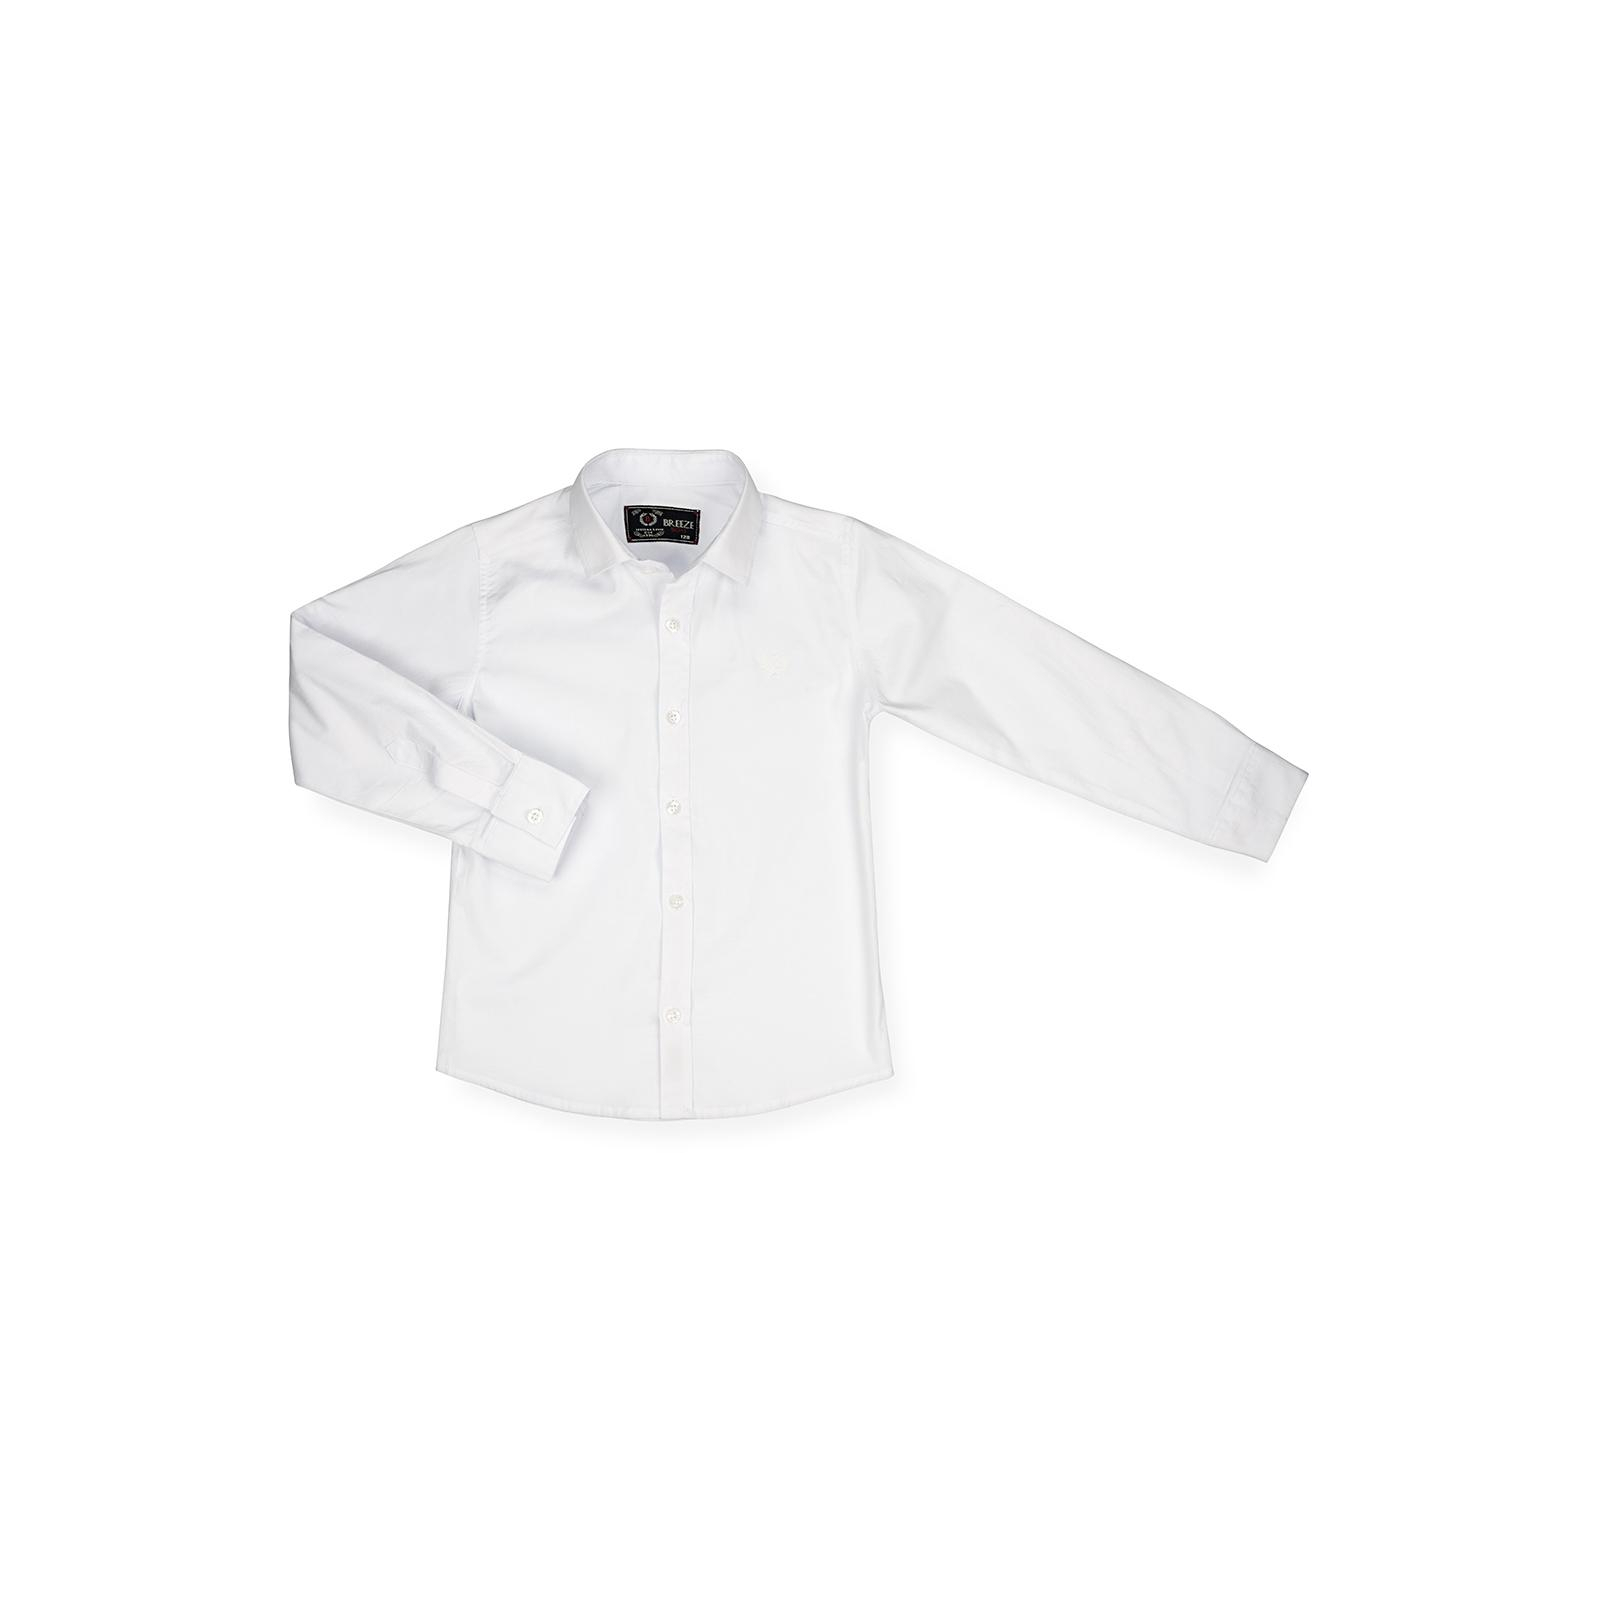 Рубашка Breeze для школы (G-285-164B-white)